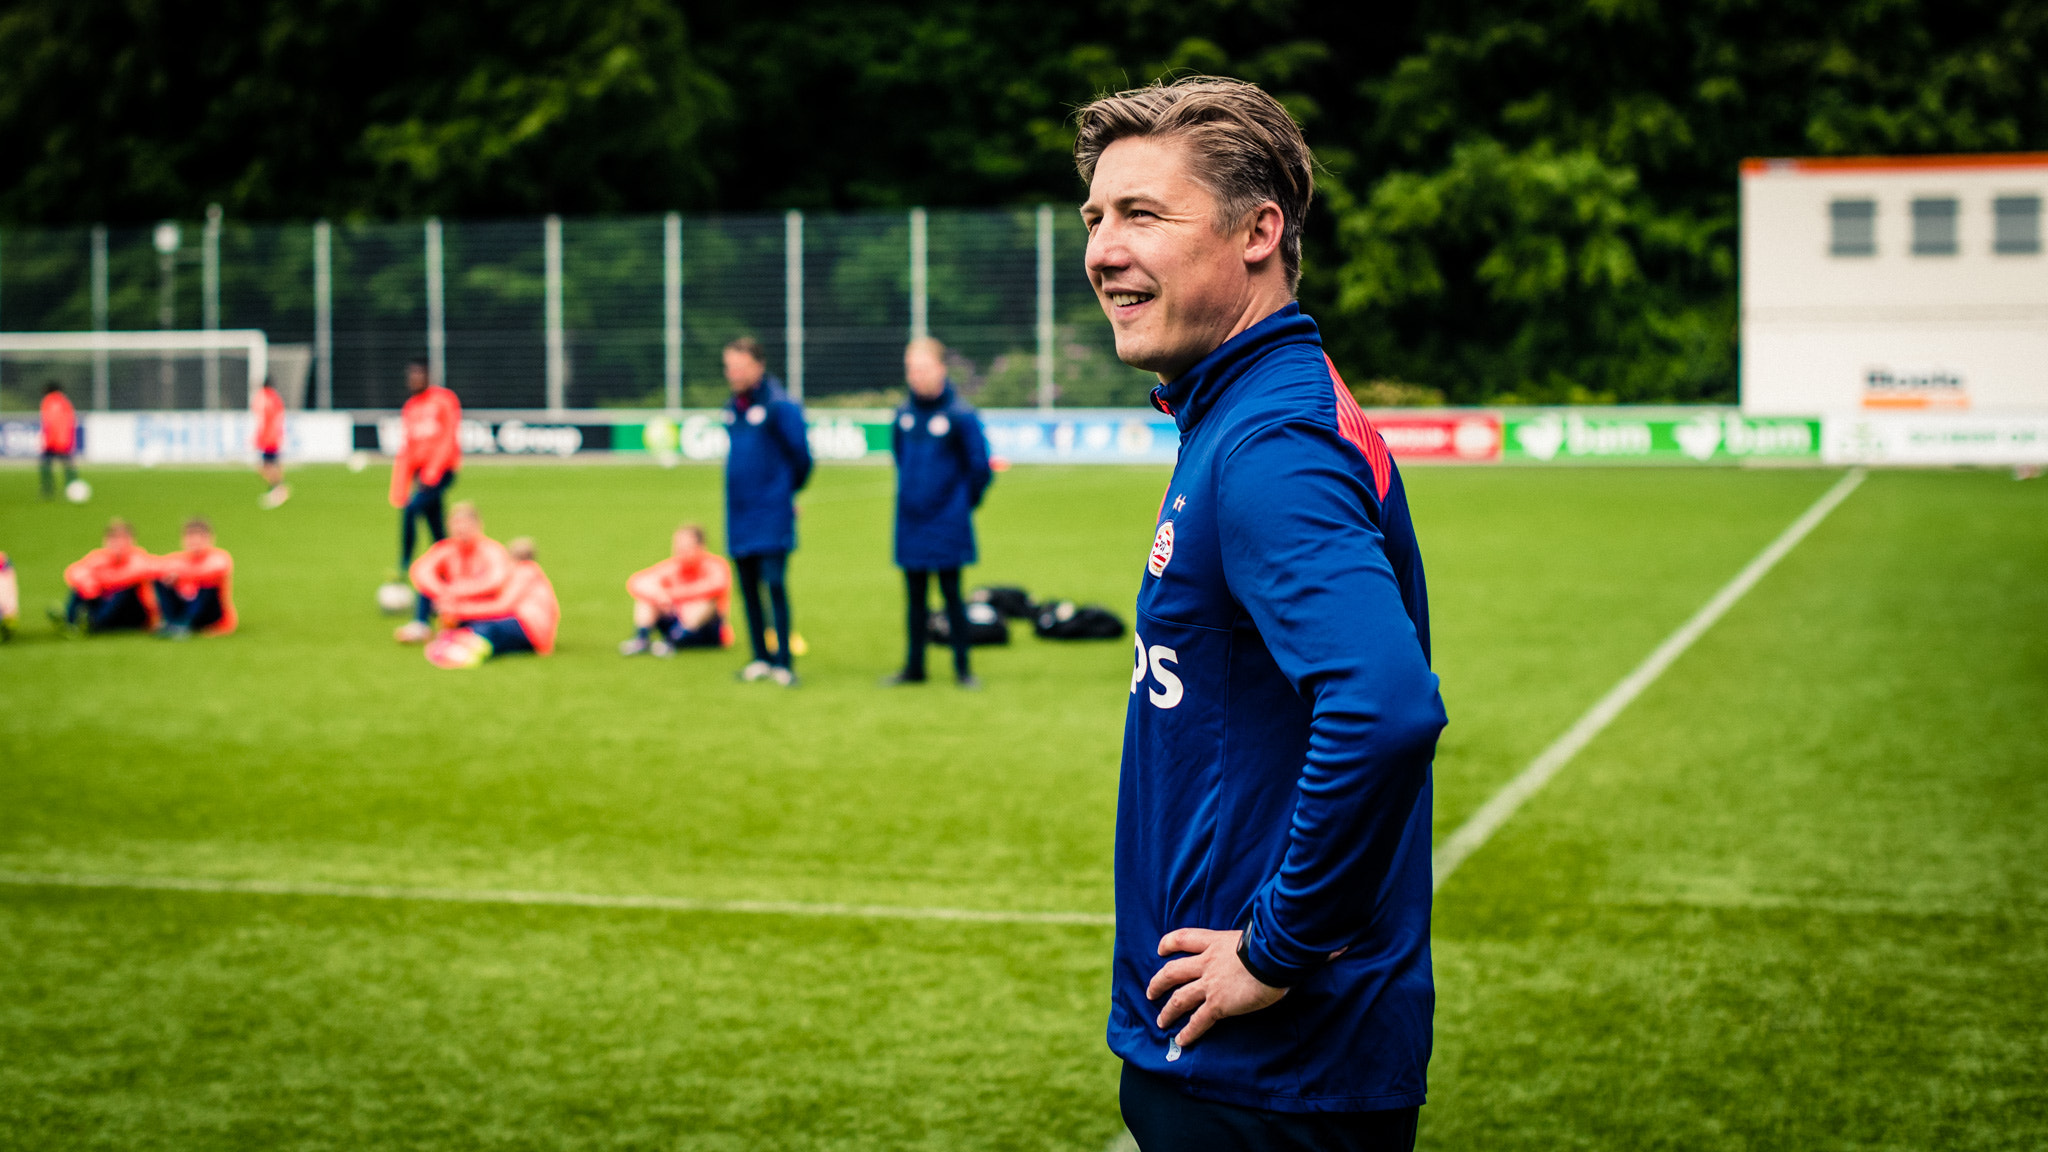 PSV youth squad training